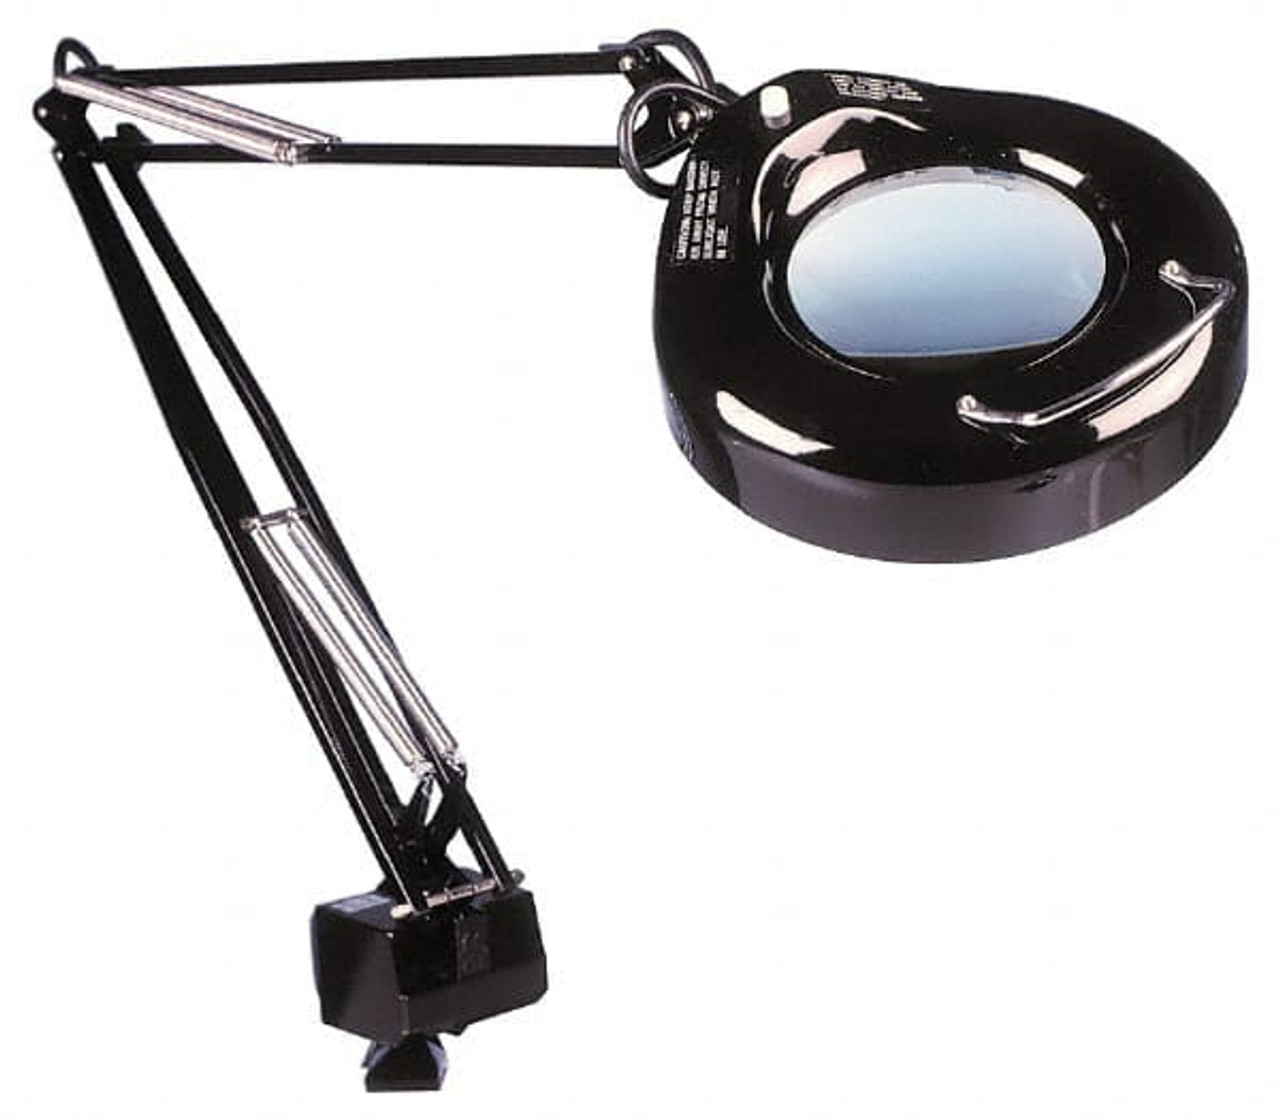 Magnifying Lamp - Tomsoo Black